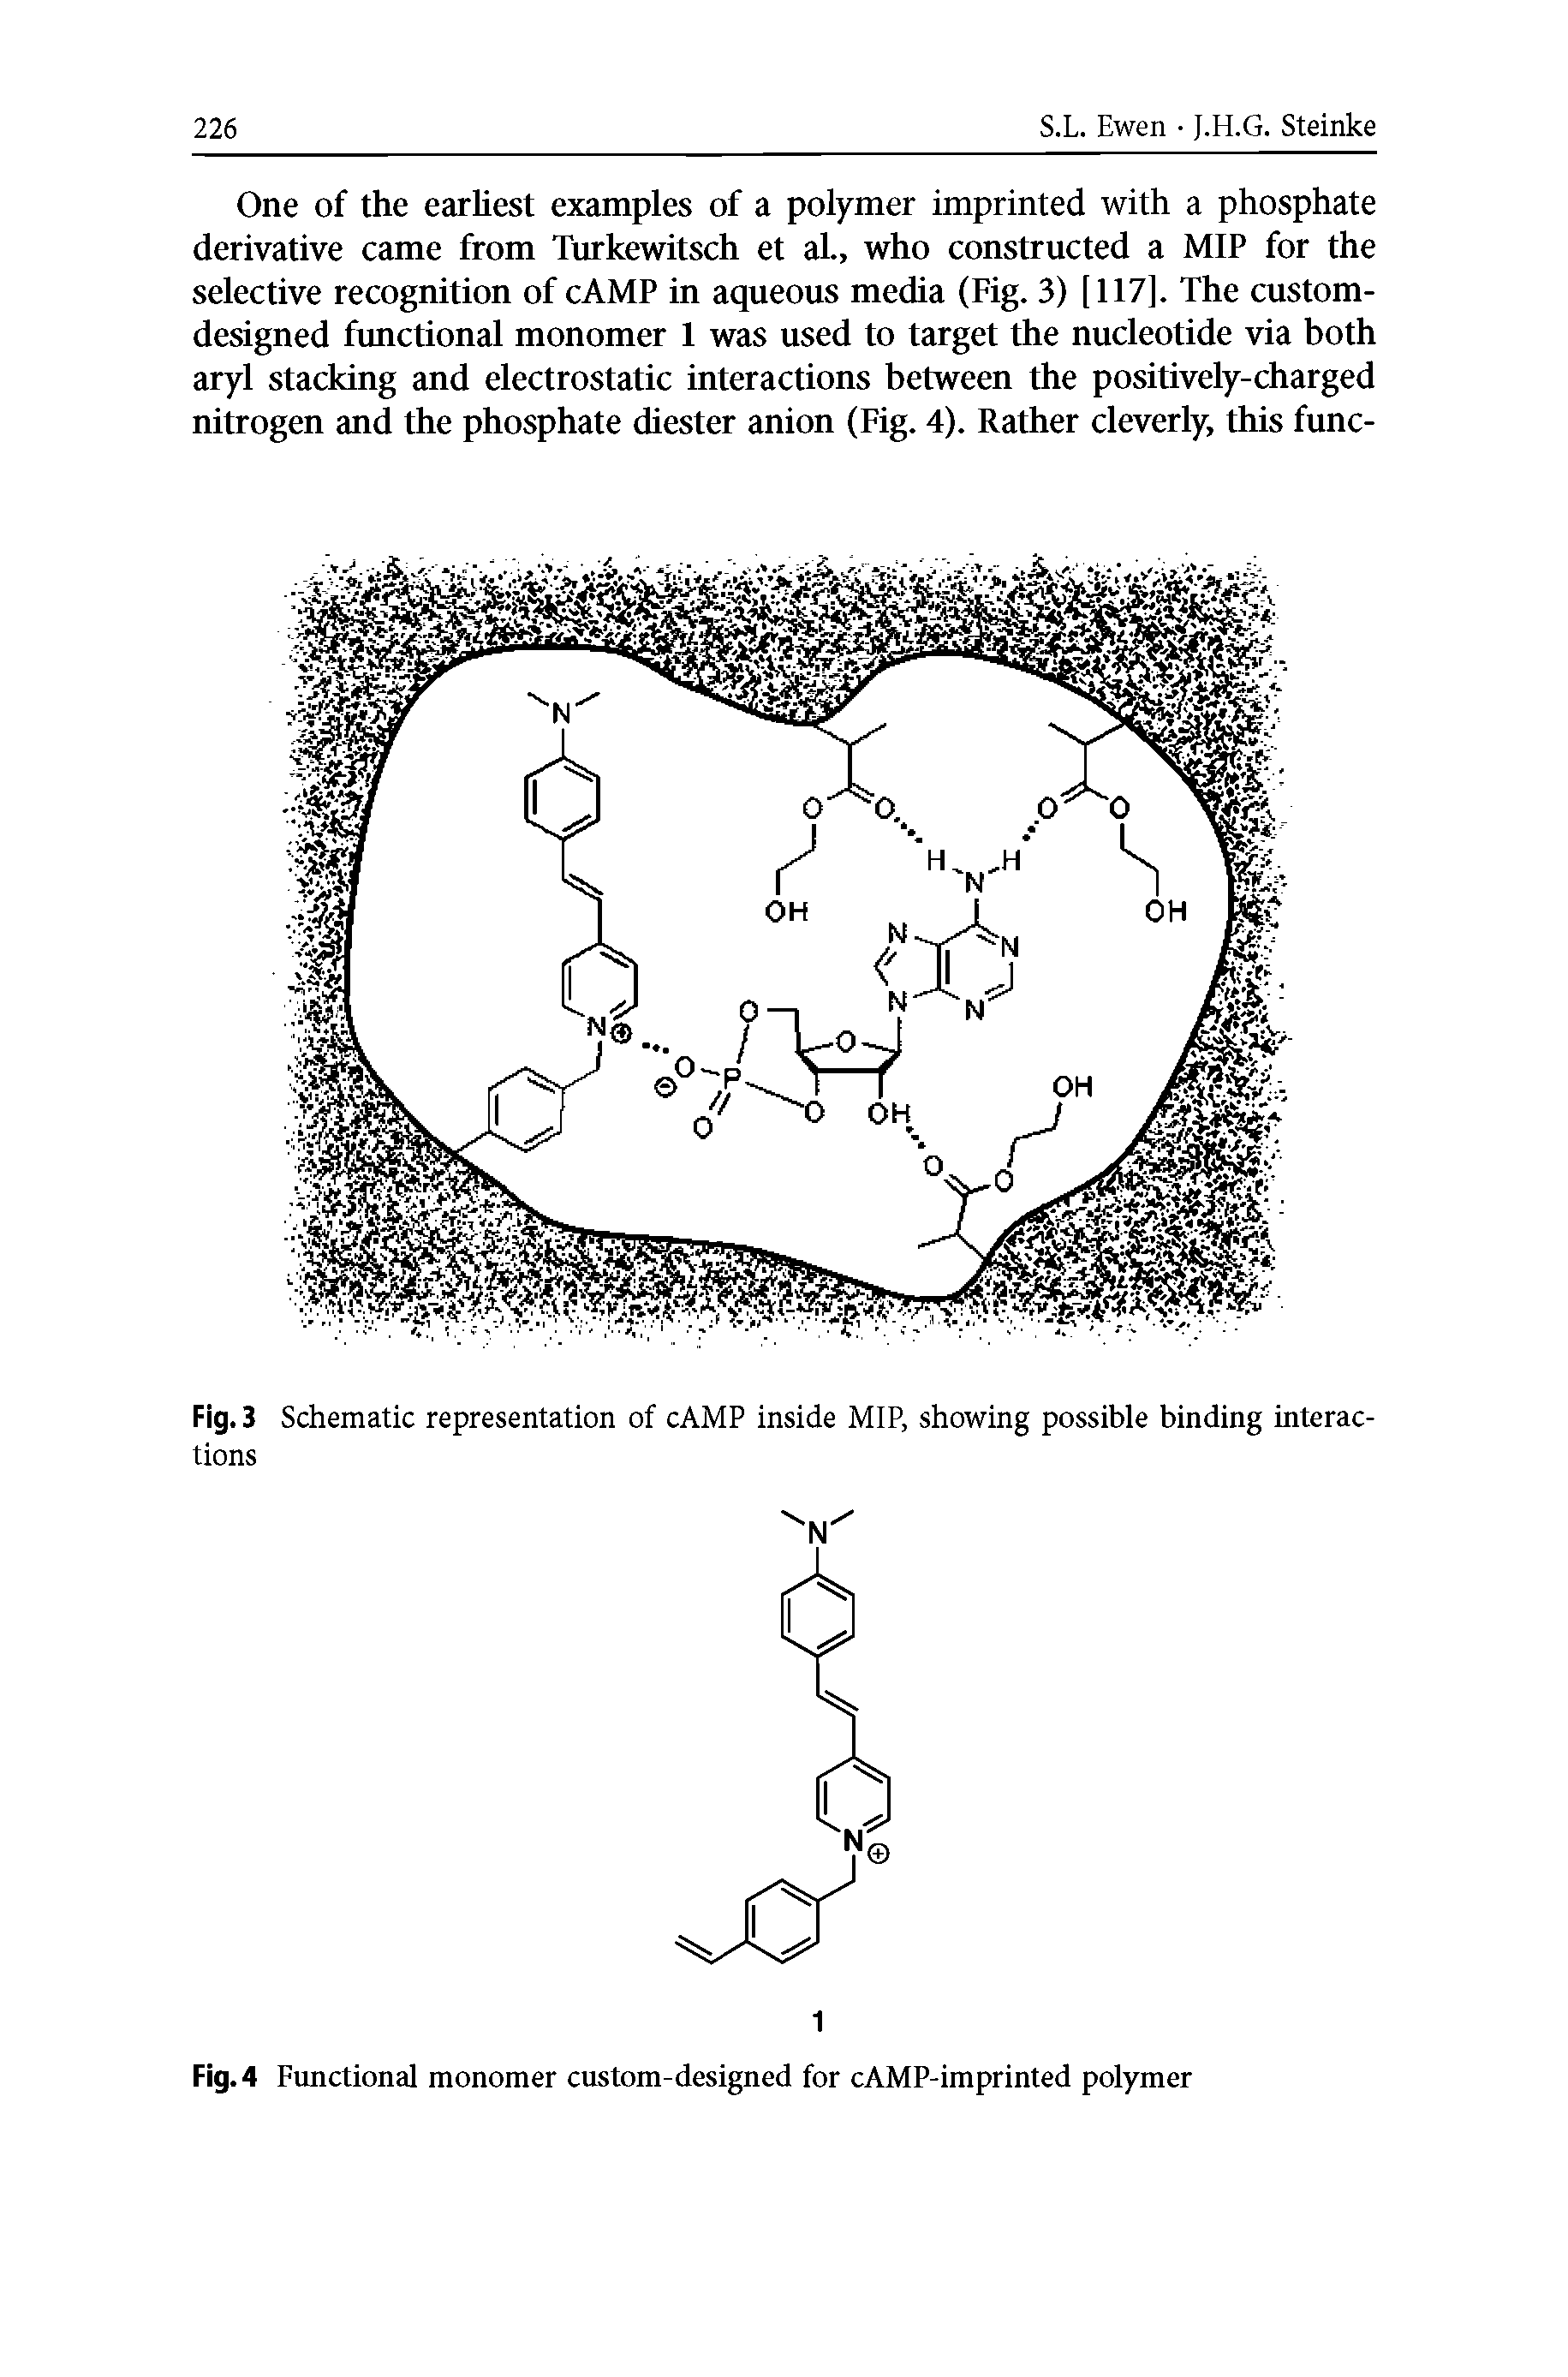 Fig. 4 Functional monomer custom-designed for cAMP-imprinted polymer...